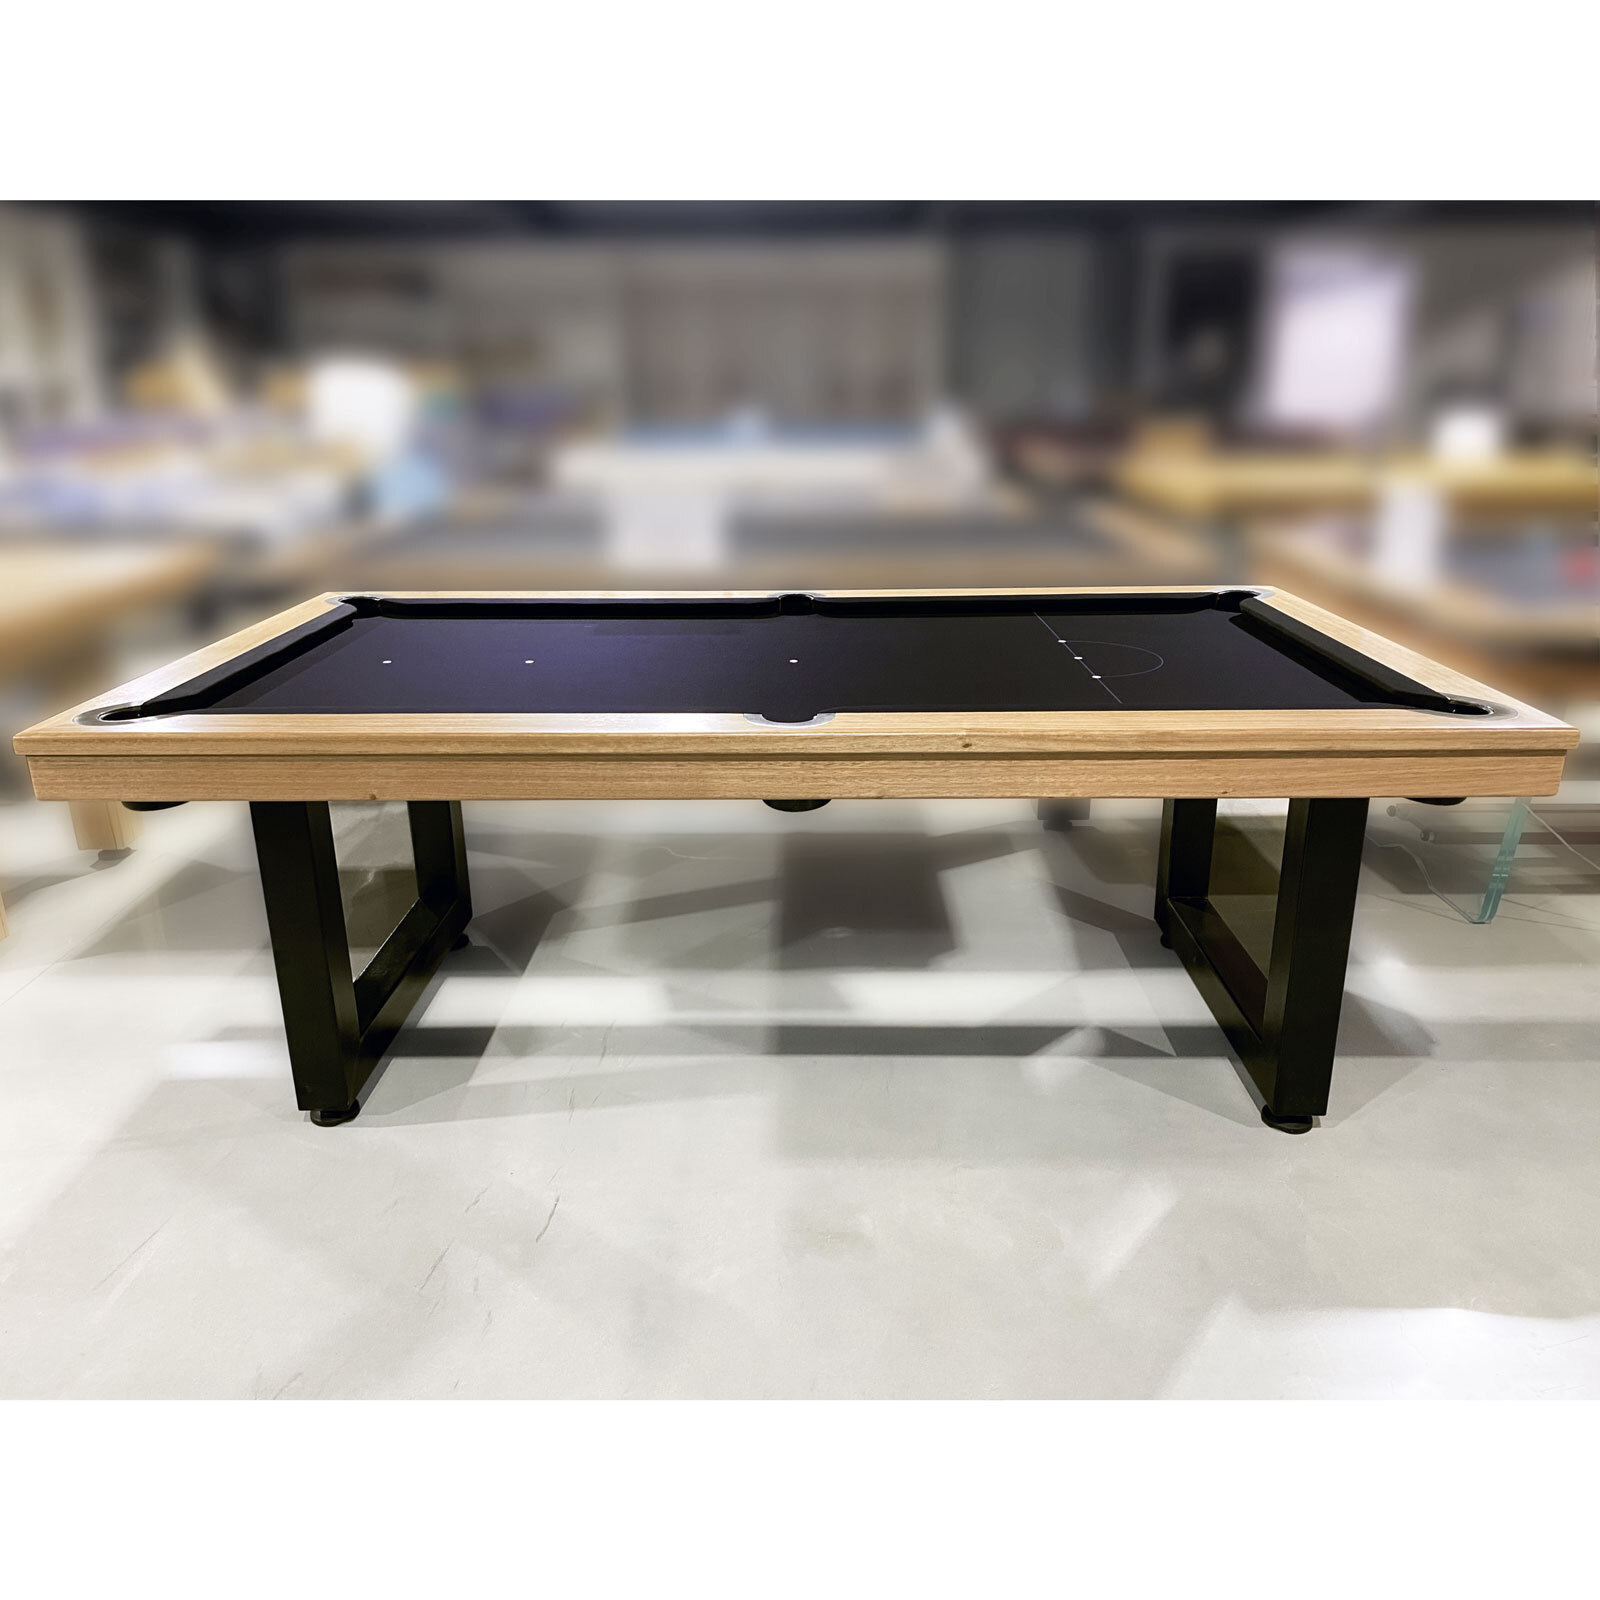 Pre-made 7 Foot Slate Odyssey Pool Billiards Table, Tassie Oak Timber